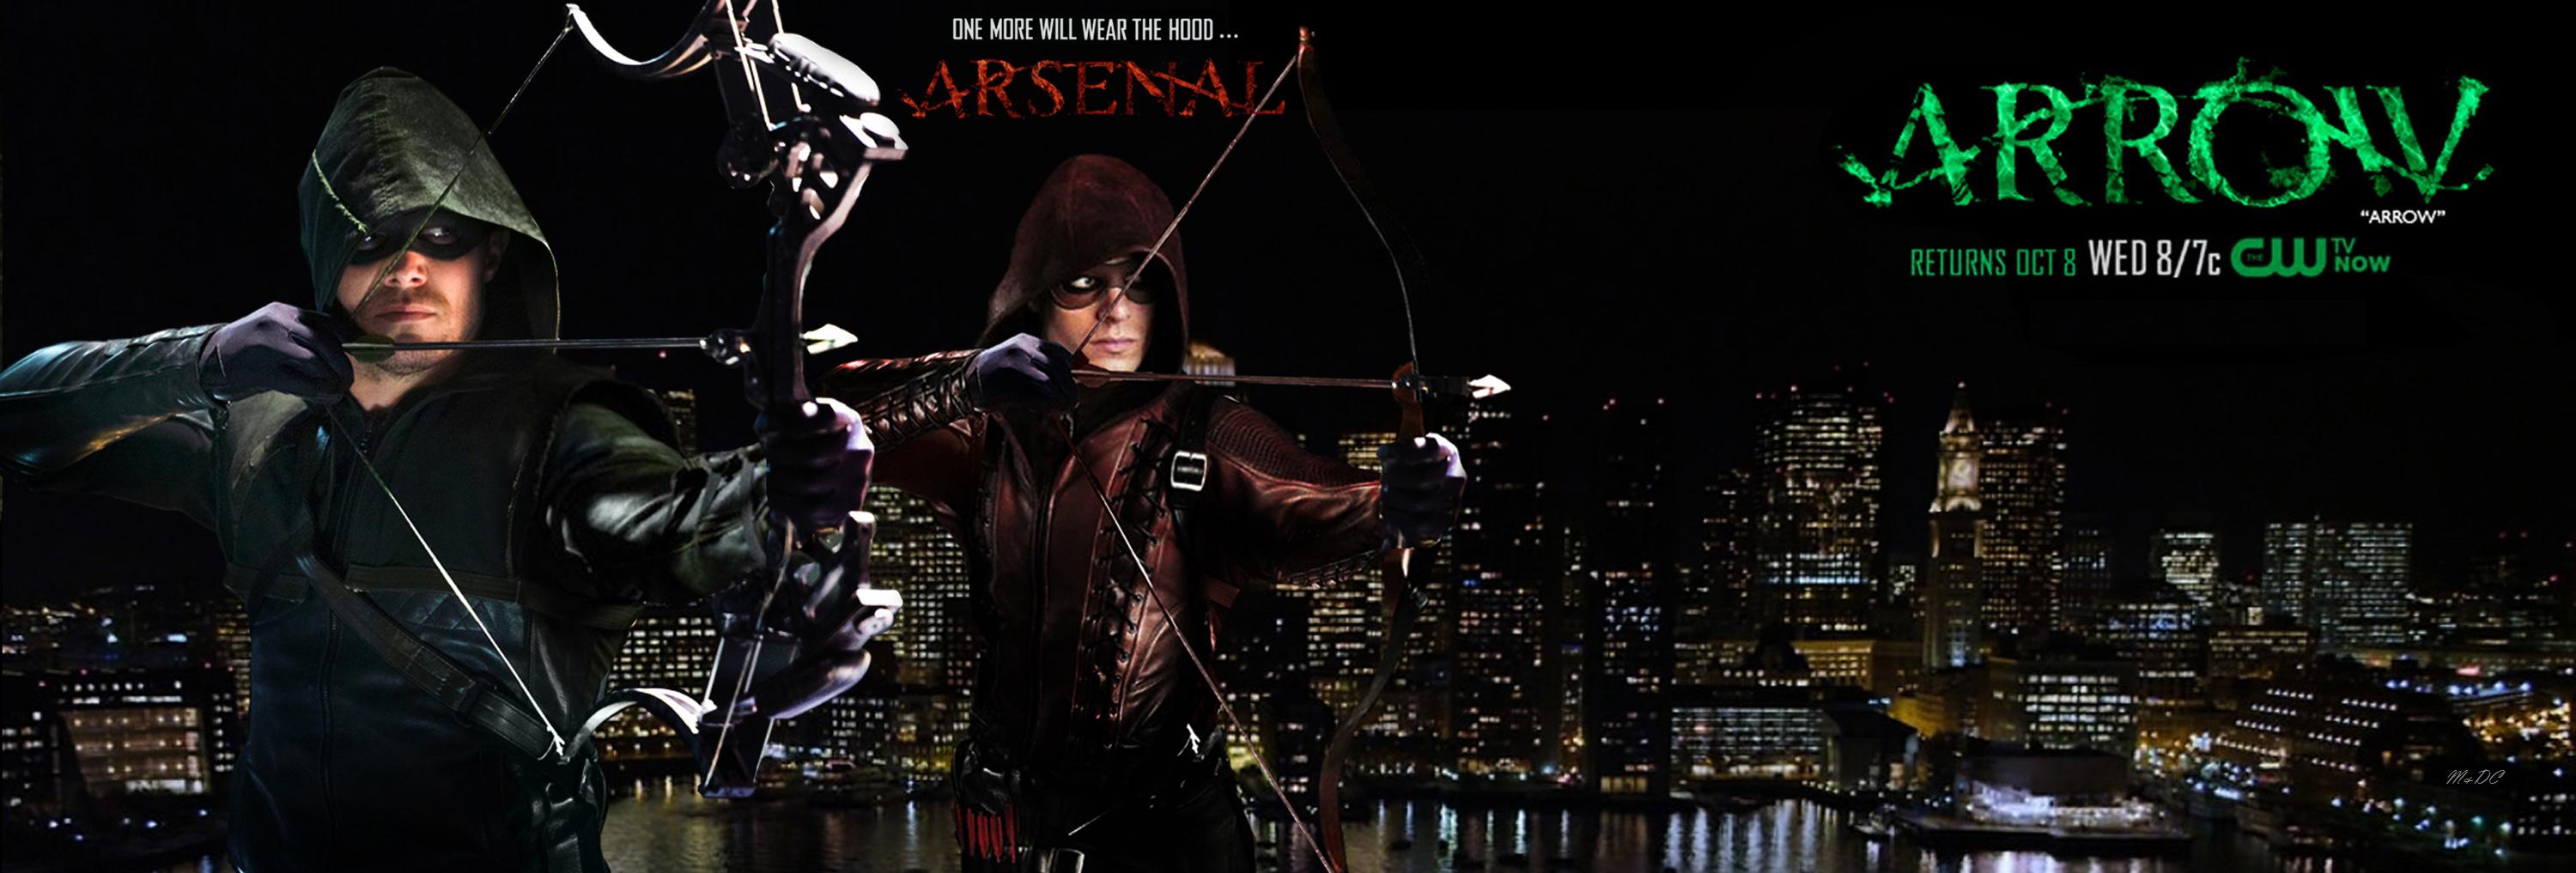 Arrow Season 3 2014 wallpaper (15 Wallpaper)